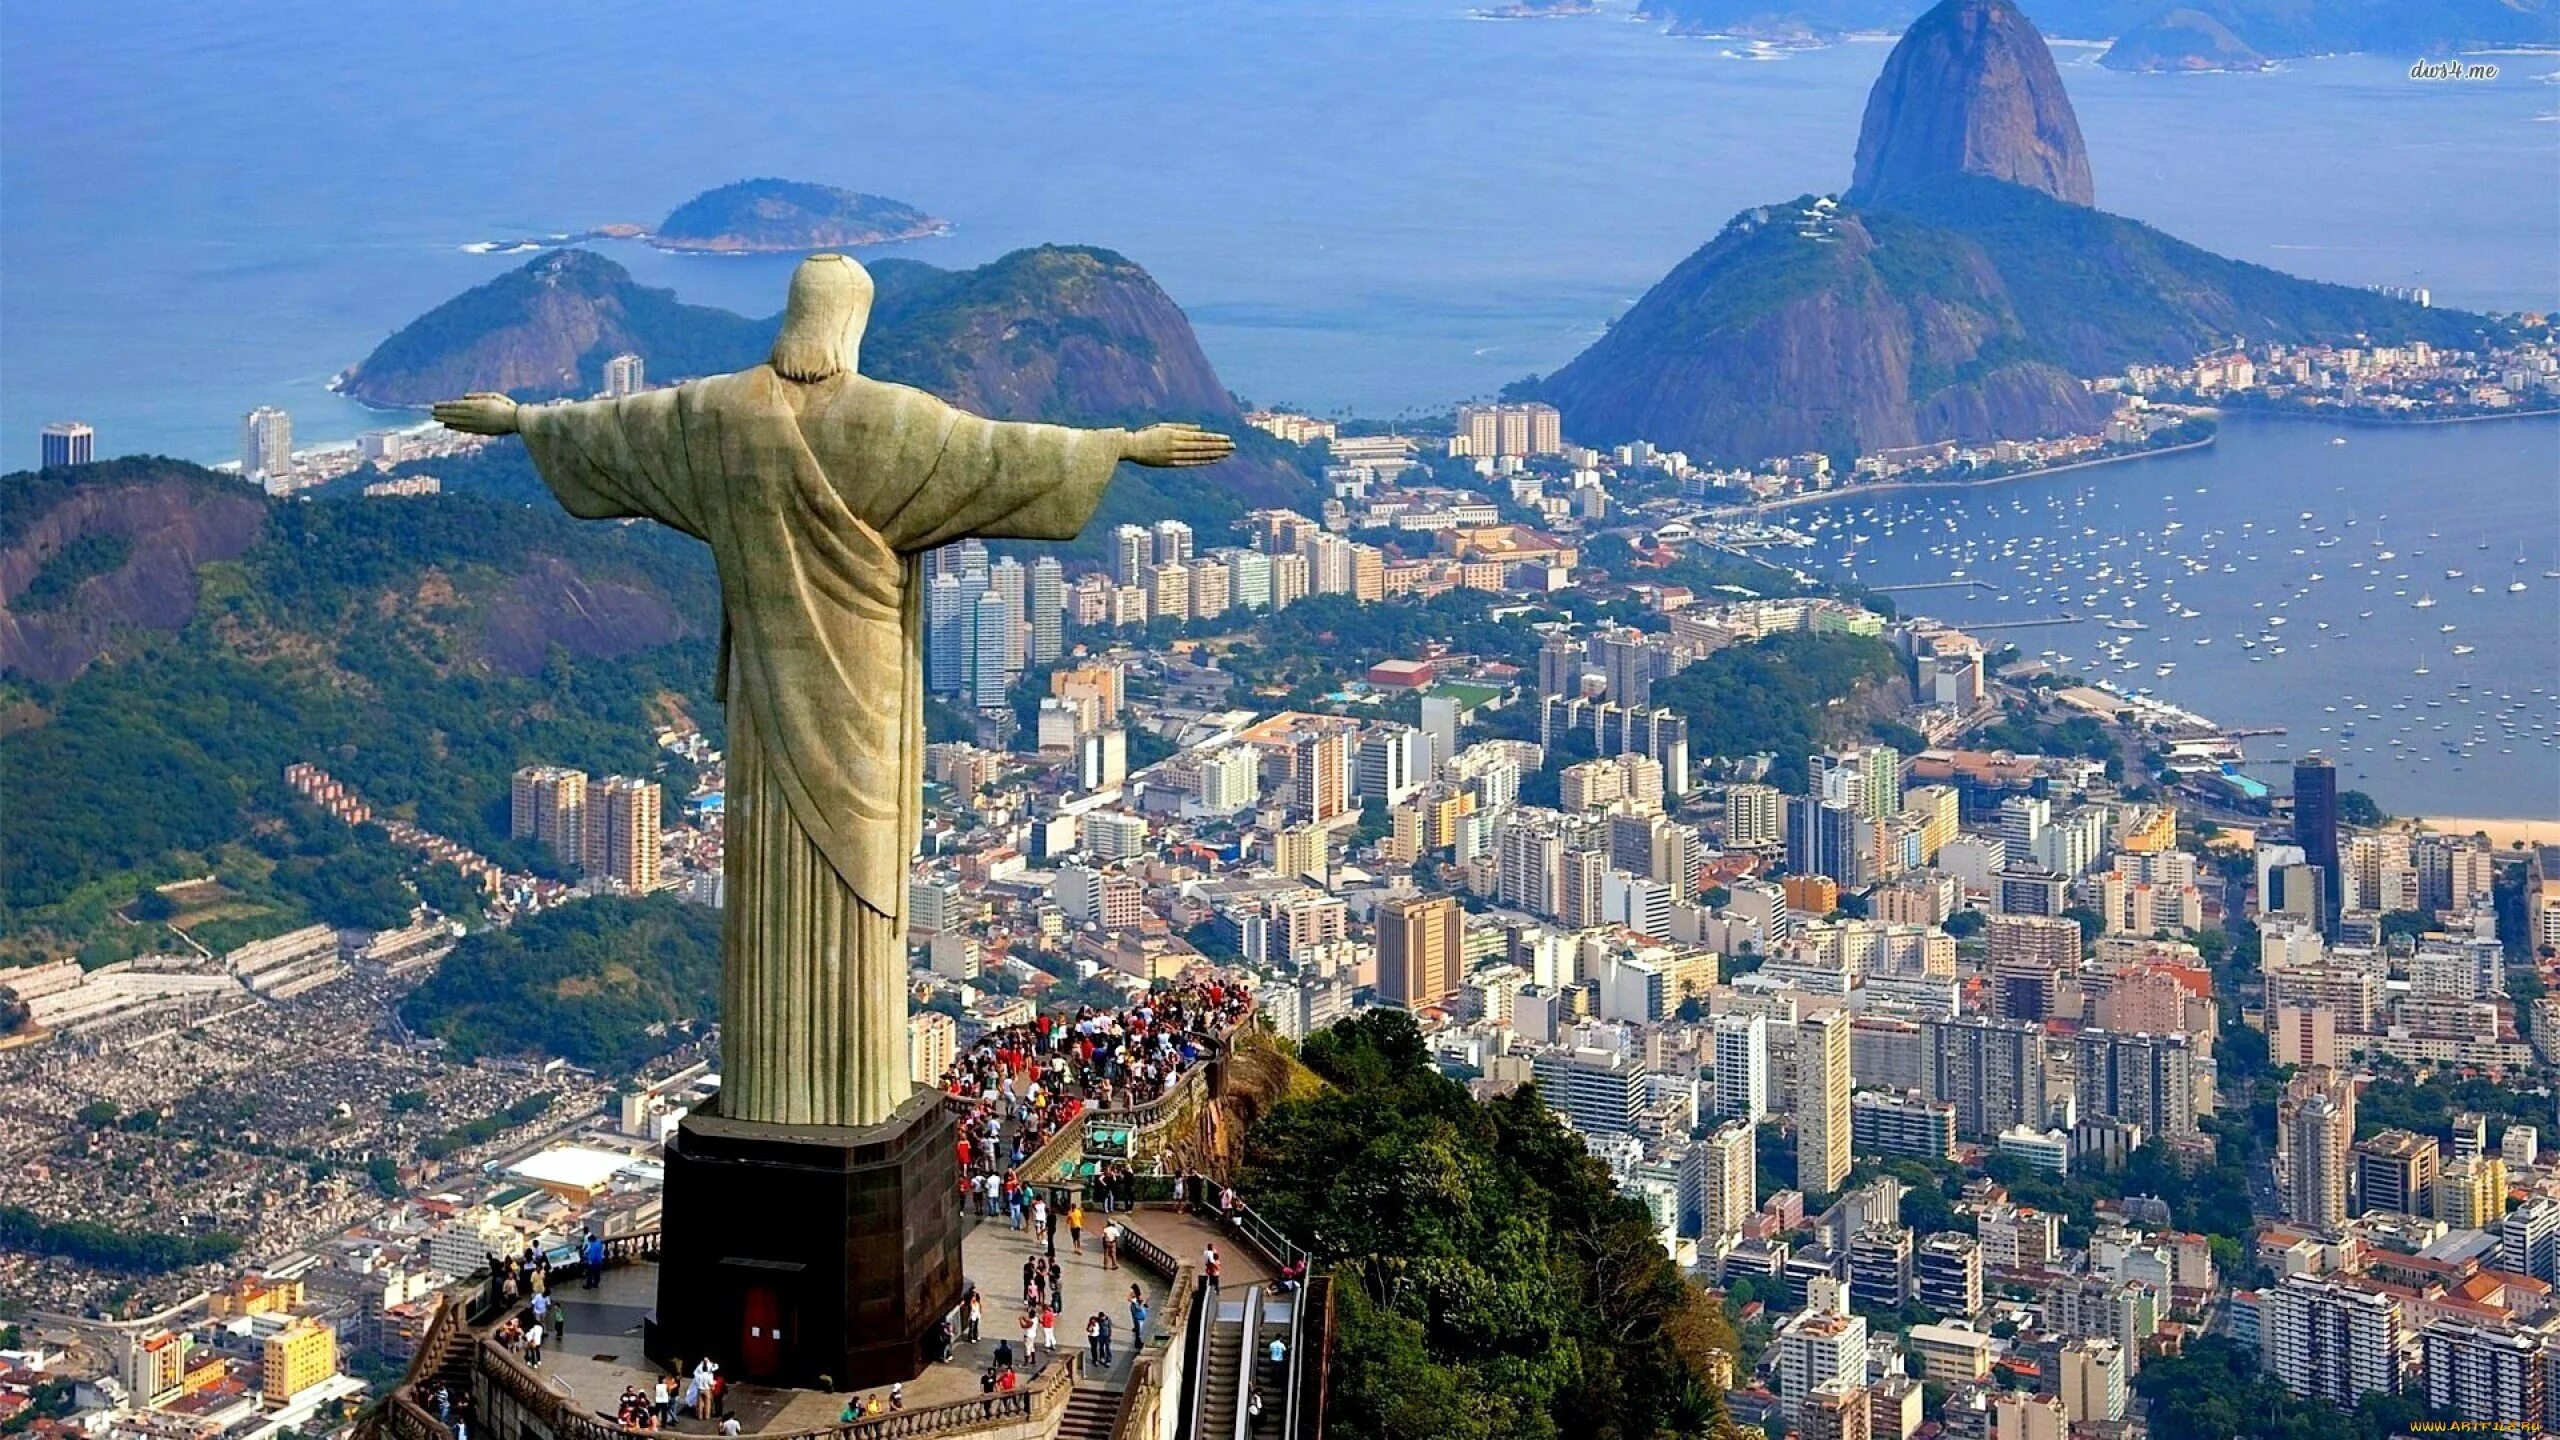 Country brazil. Статуя Христа в Рио-де-Жанейро. Рио-де-Жанейро (город в Бразилии). Статуя Христа-Искупителя Рио-де-Жанейро. Статуя Христа Искупителя Аргентина.